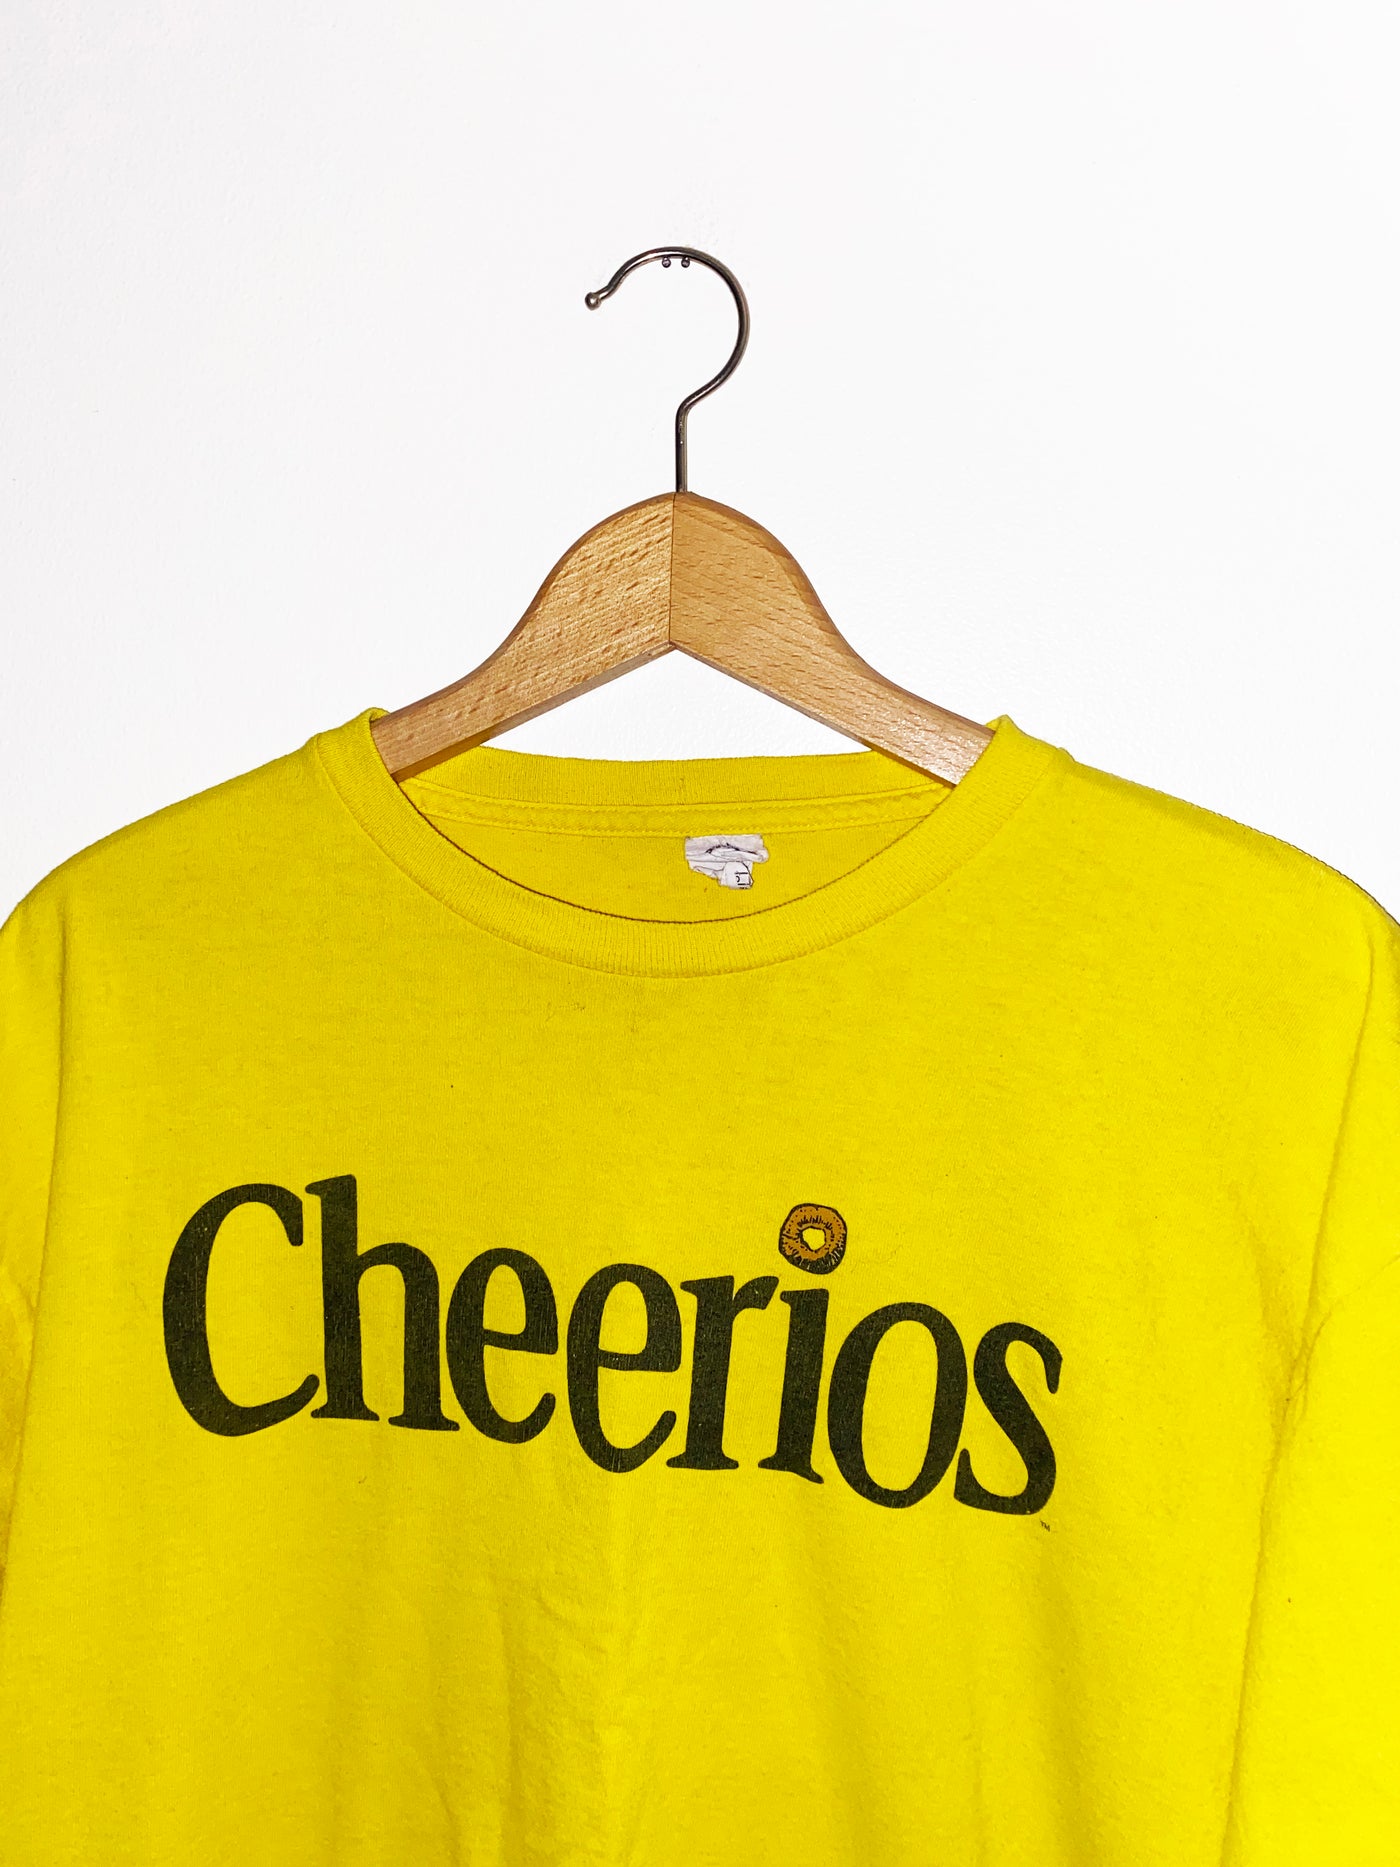 Vintage Cheerios Promo T-Shirt on Delta Tag